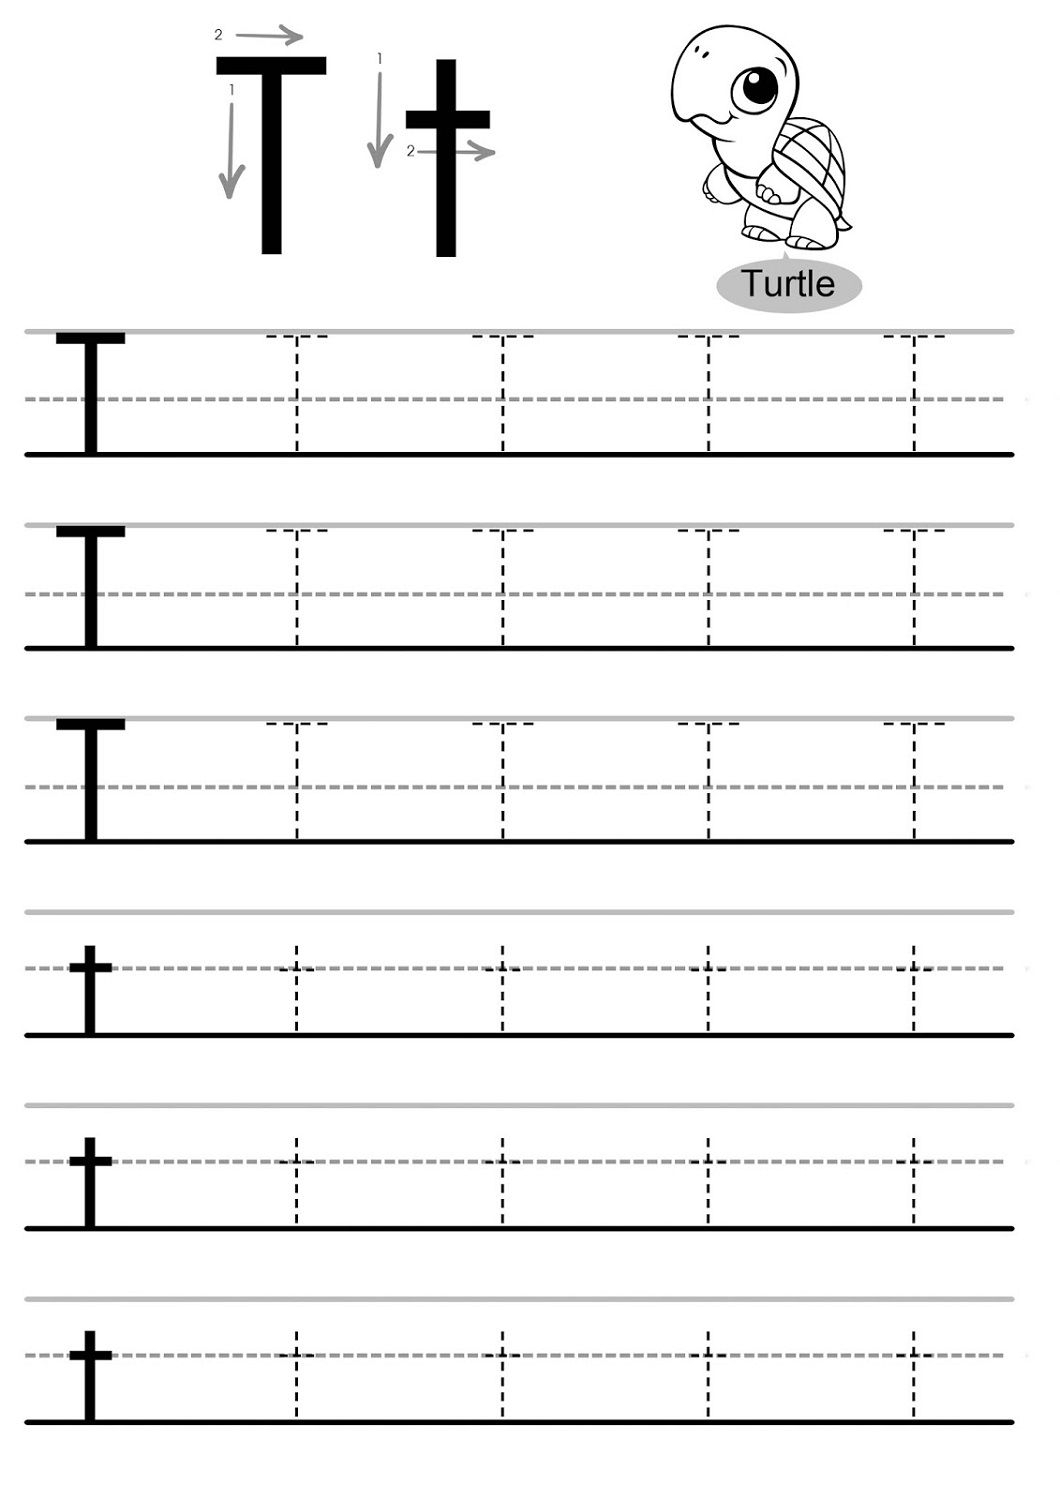 Traceable Letter Worksheets - Kids Learning Activity intended for Letter T Worksheets Printable